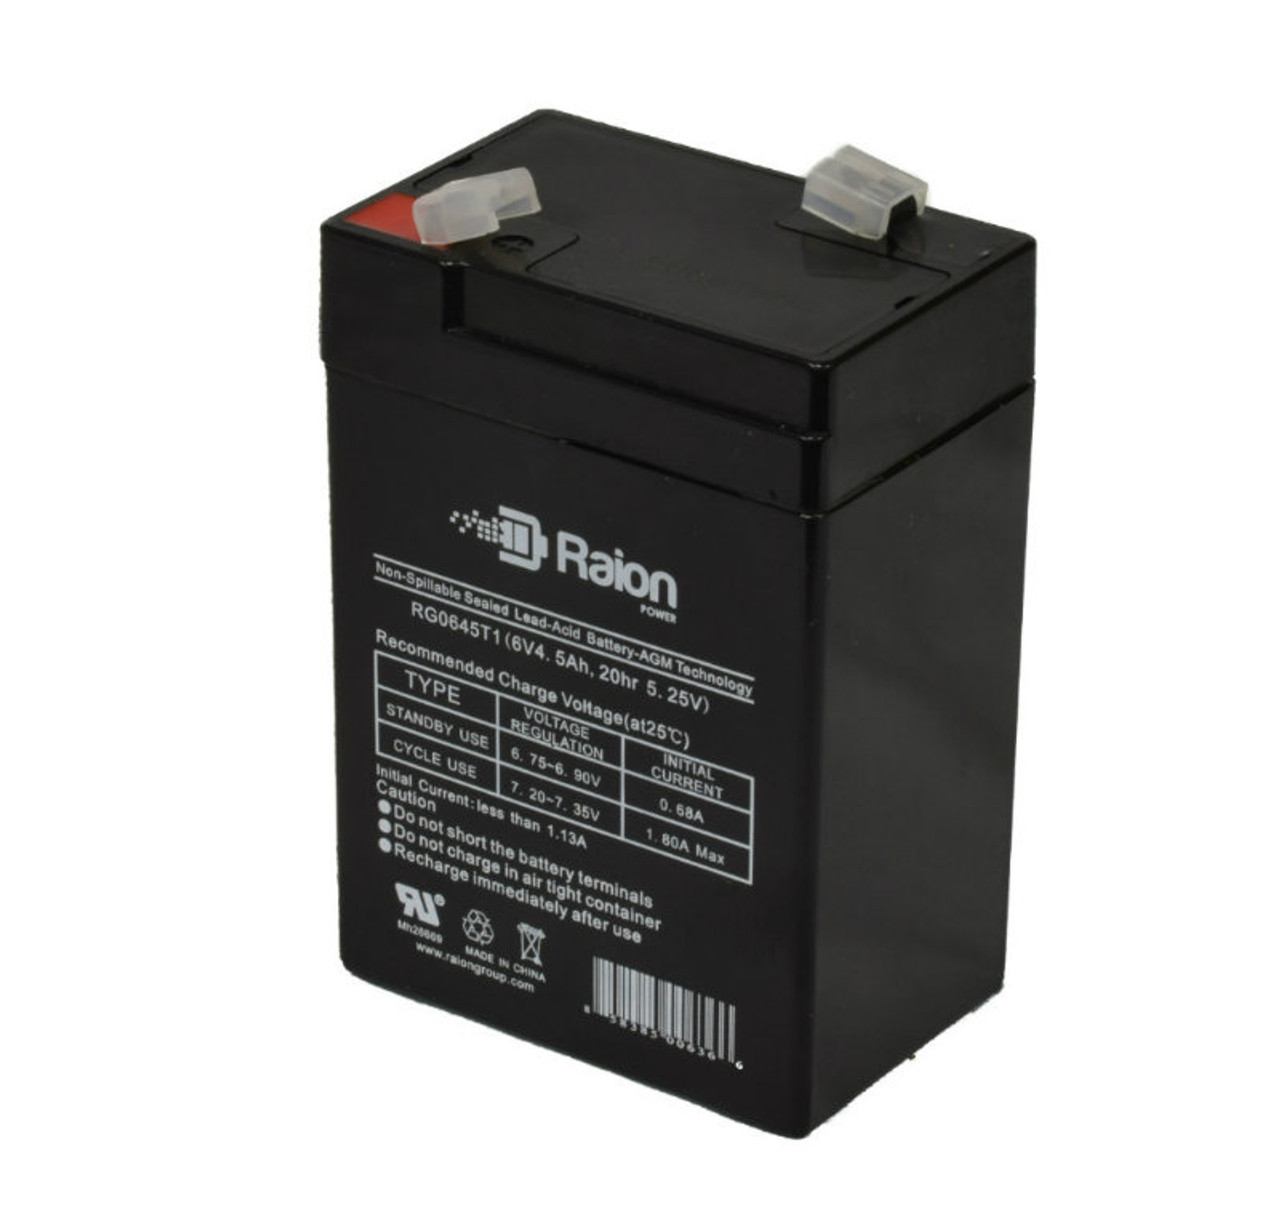 Raion Power RG0645T1 6V 4.5Ah Replacement Battery Cartridge for Kaiying KS4.2-6